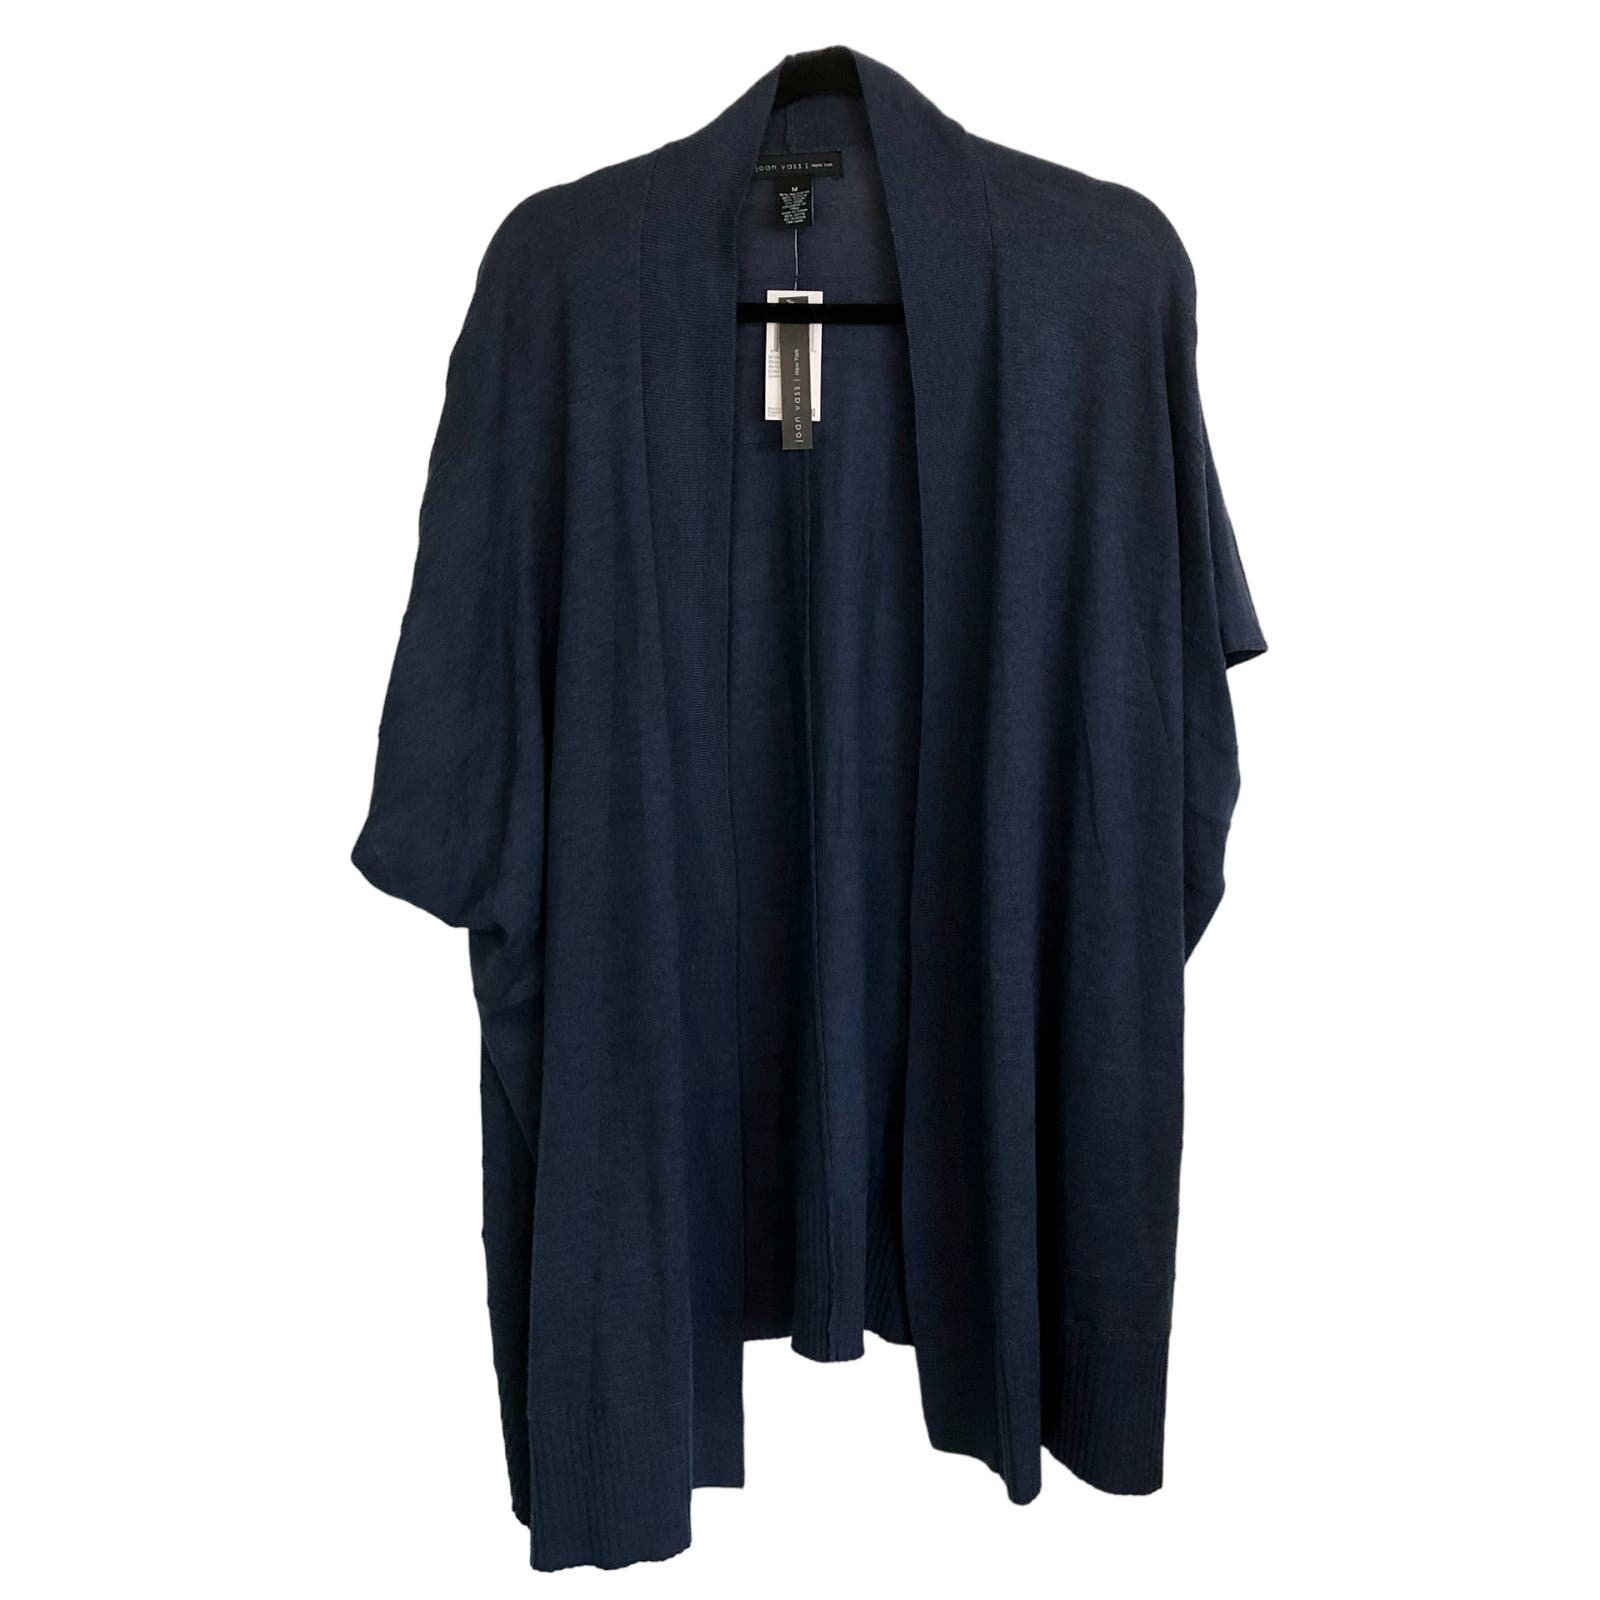 NWT Joan Voss Cardigan Size Medium Dark Blue Wool Blend